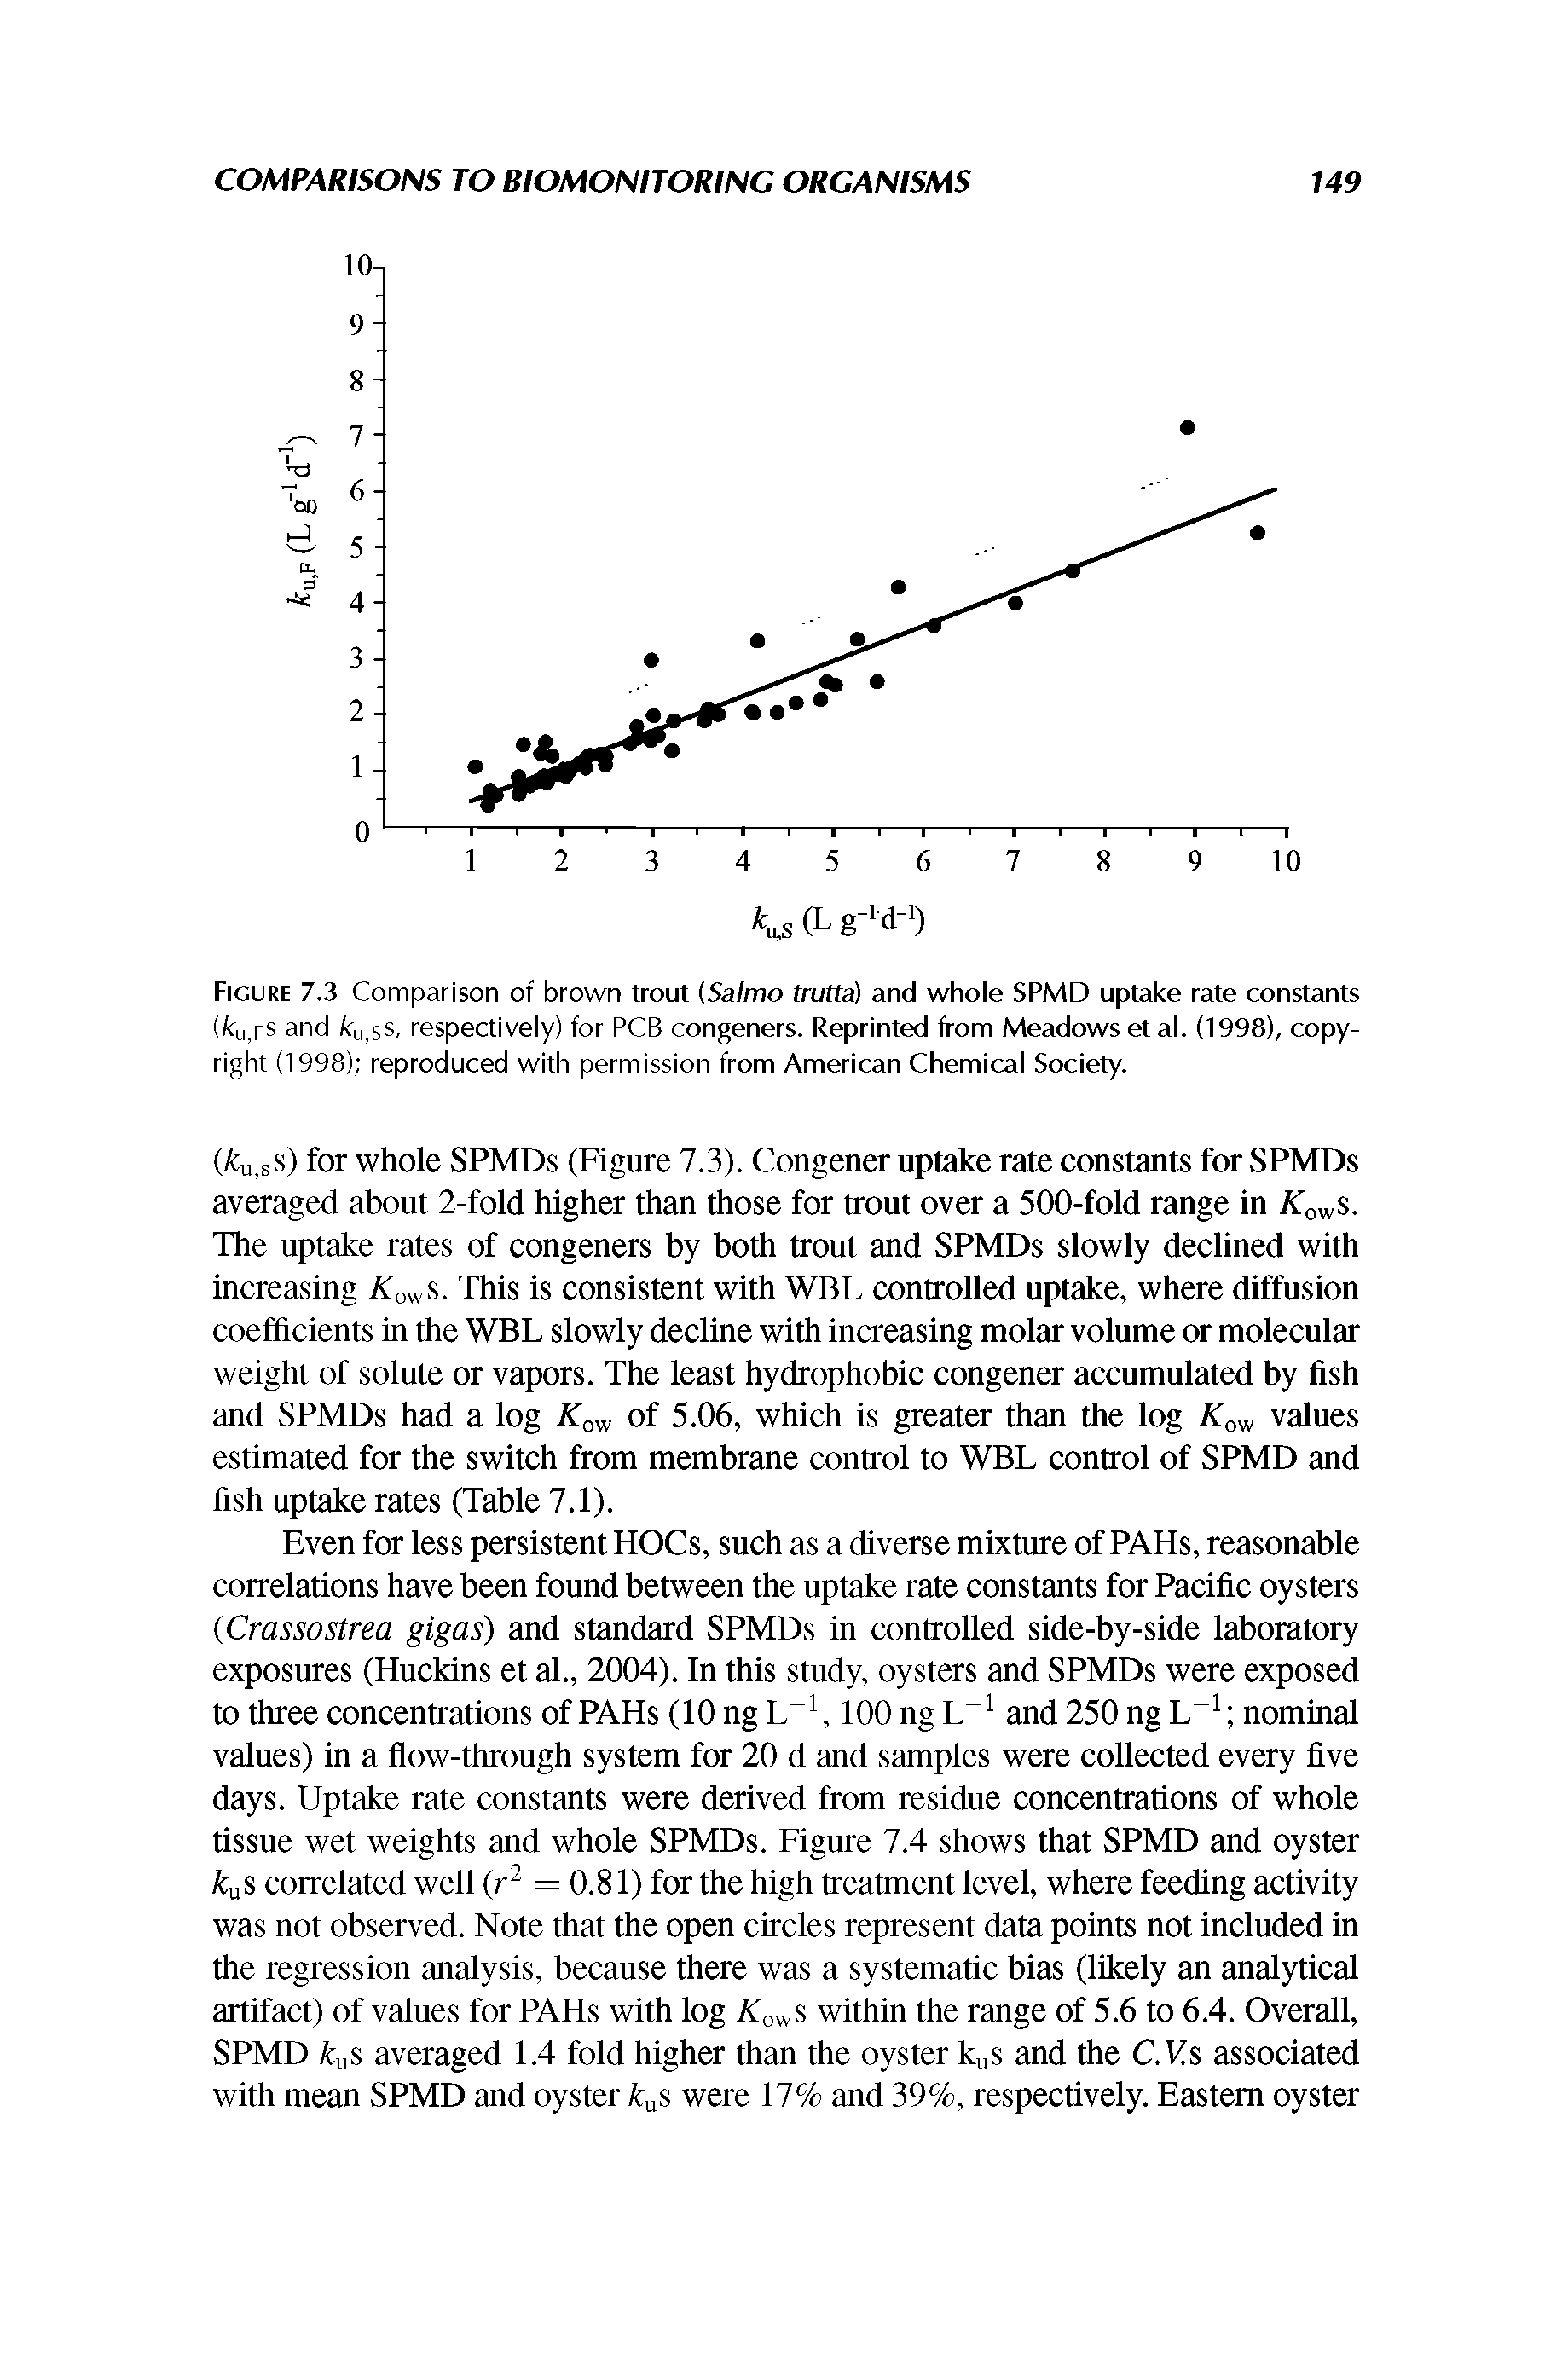 Figure 7.3 Comparison of brown trout (Salmo trutta) and whole SPMD uptake rate constants...